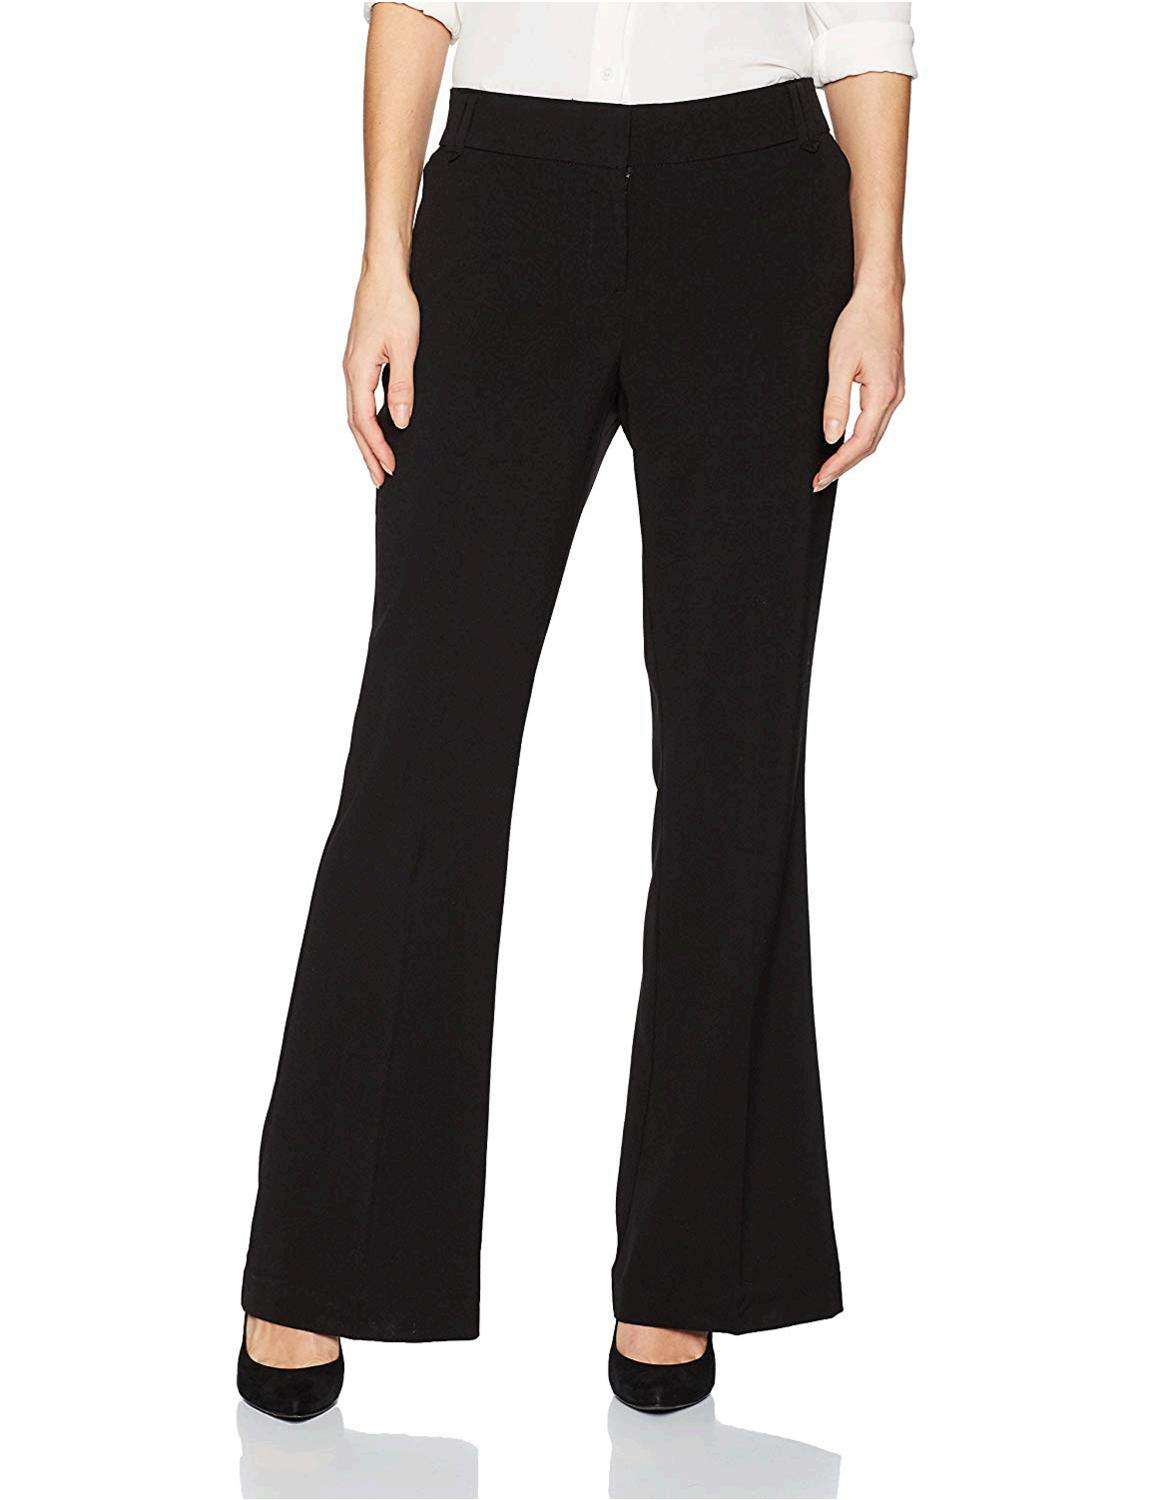 Briggs New York Women's Pants, Black, 16, Black, Size U5Sn | eBay